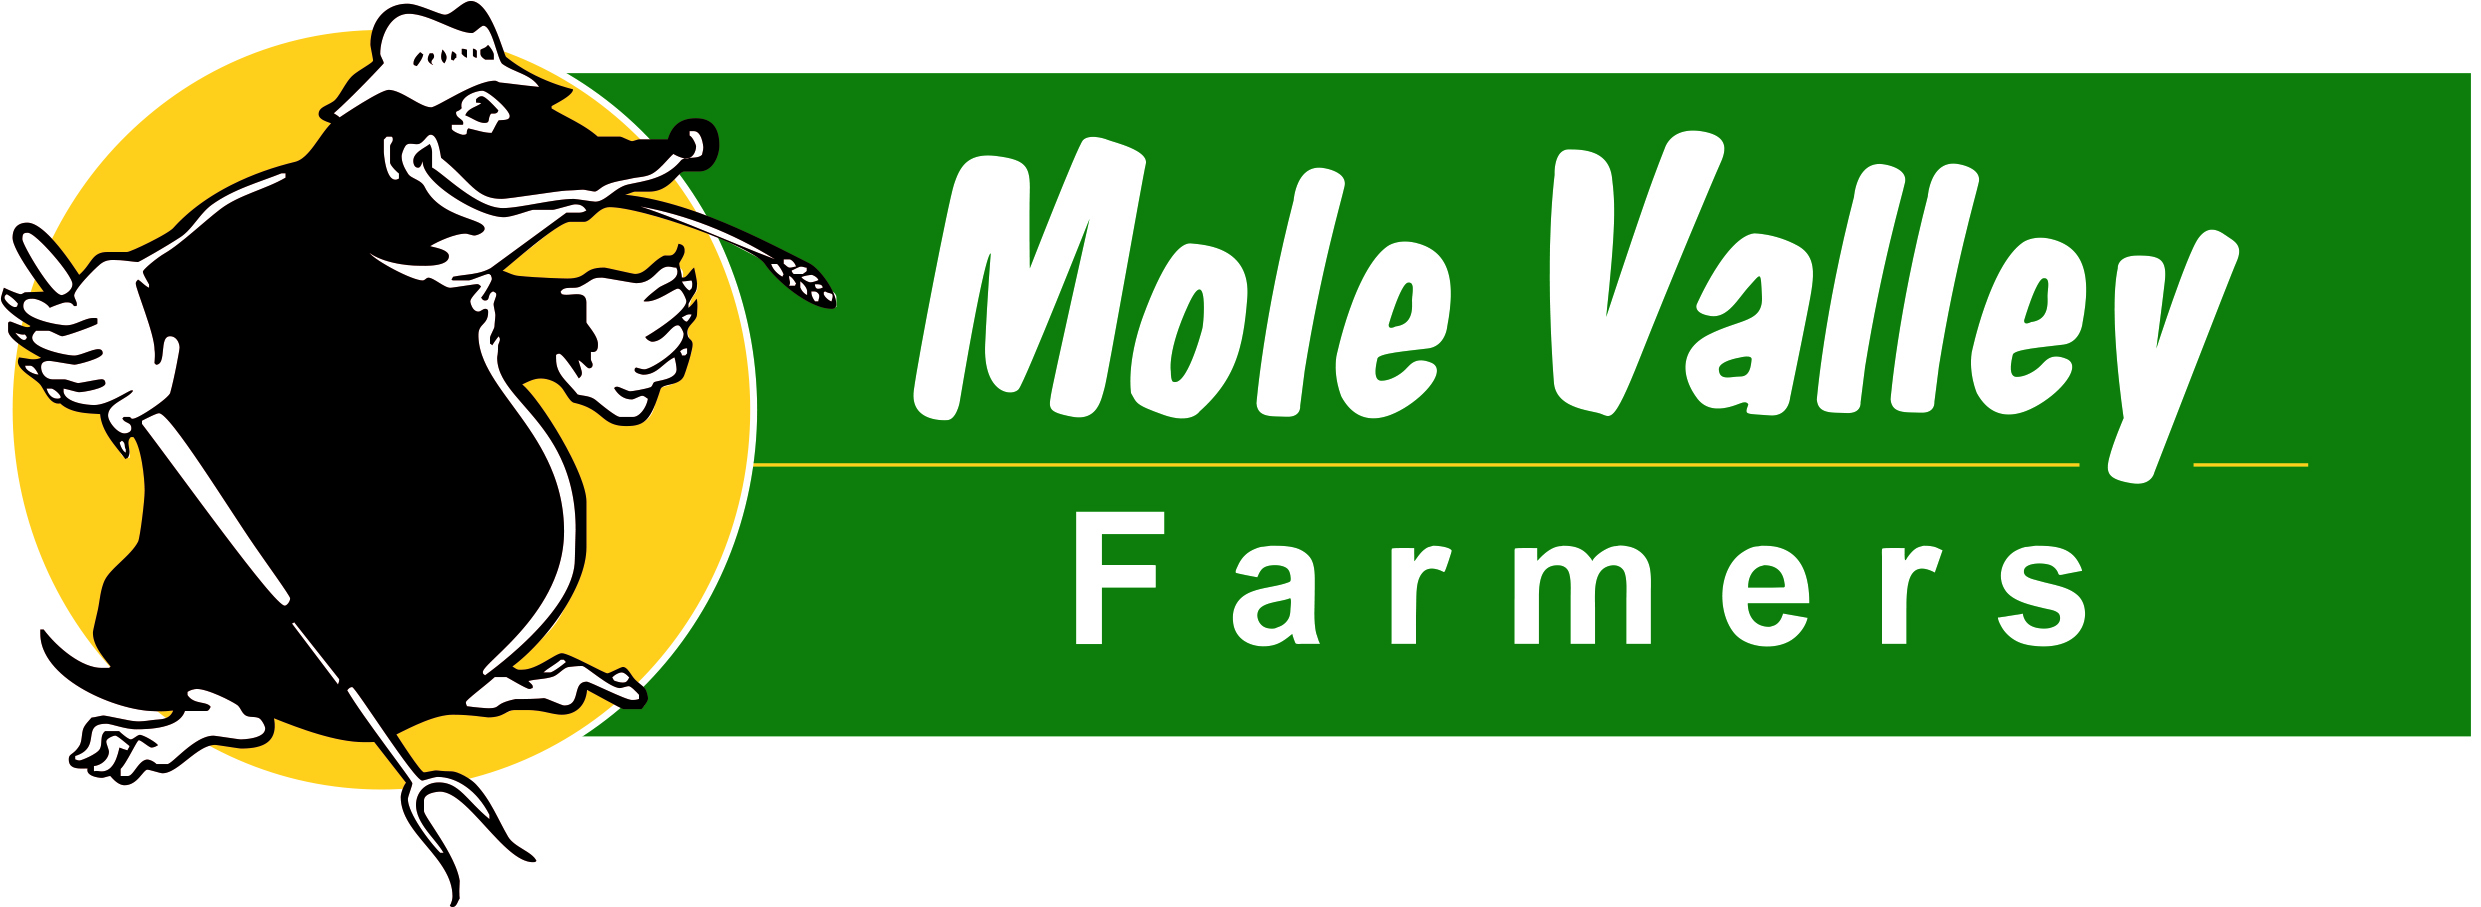 Mole valley logo.jpg